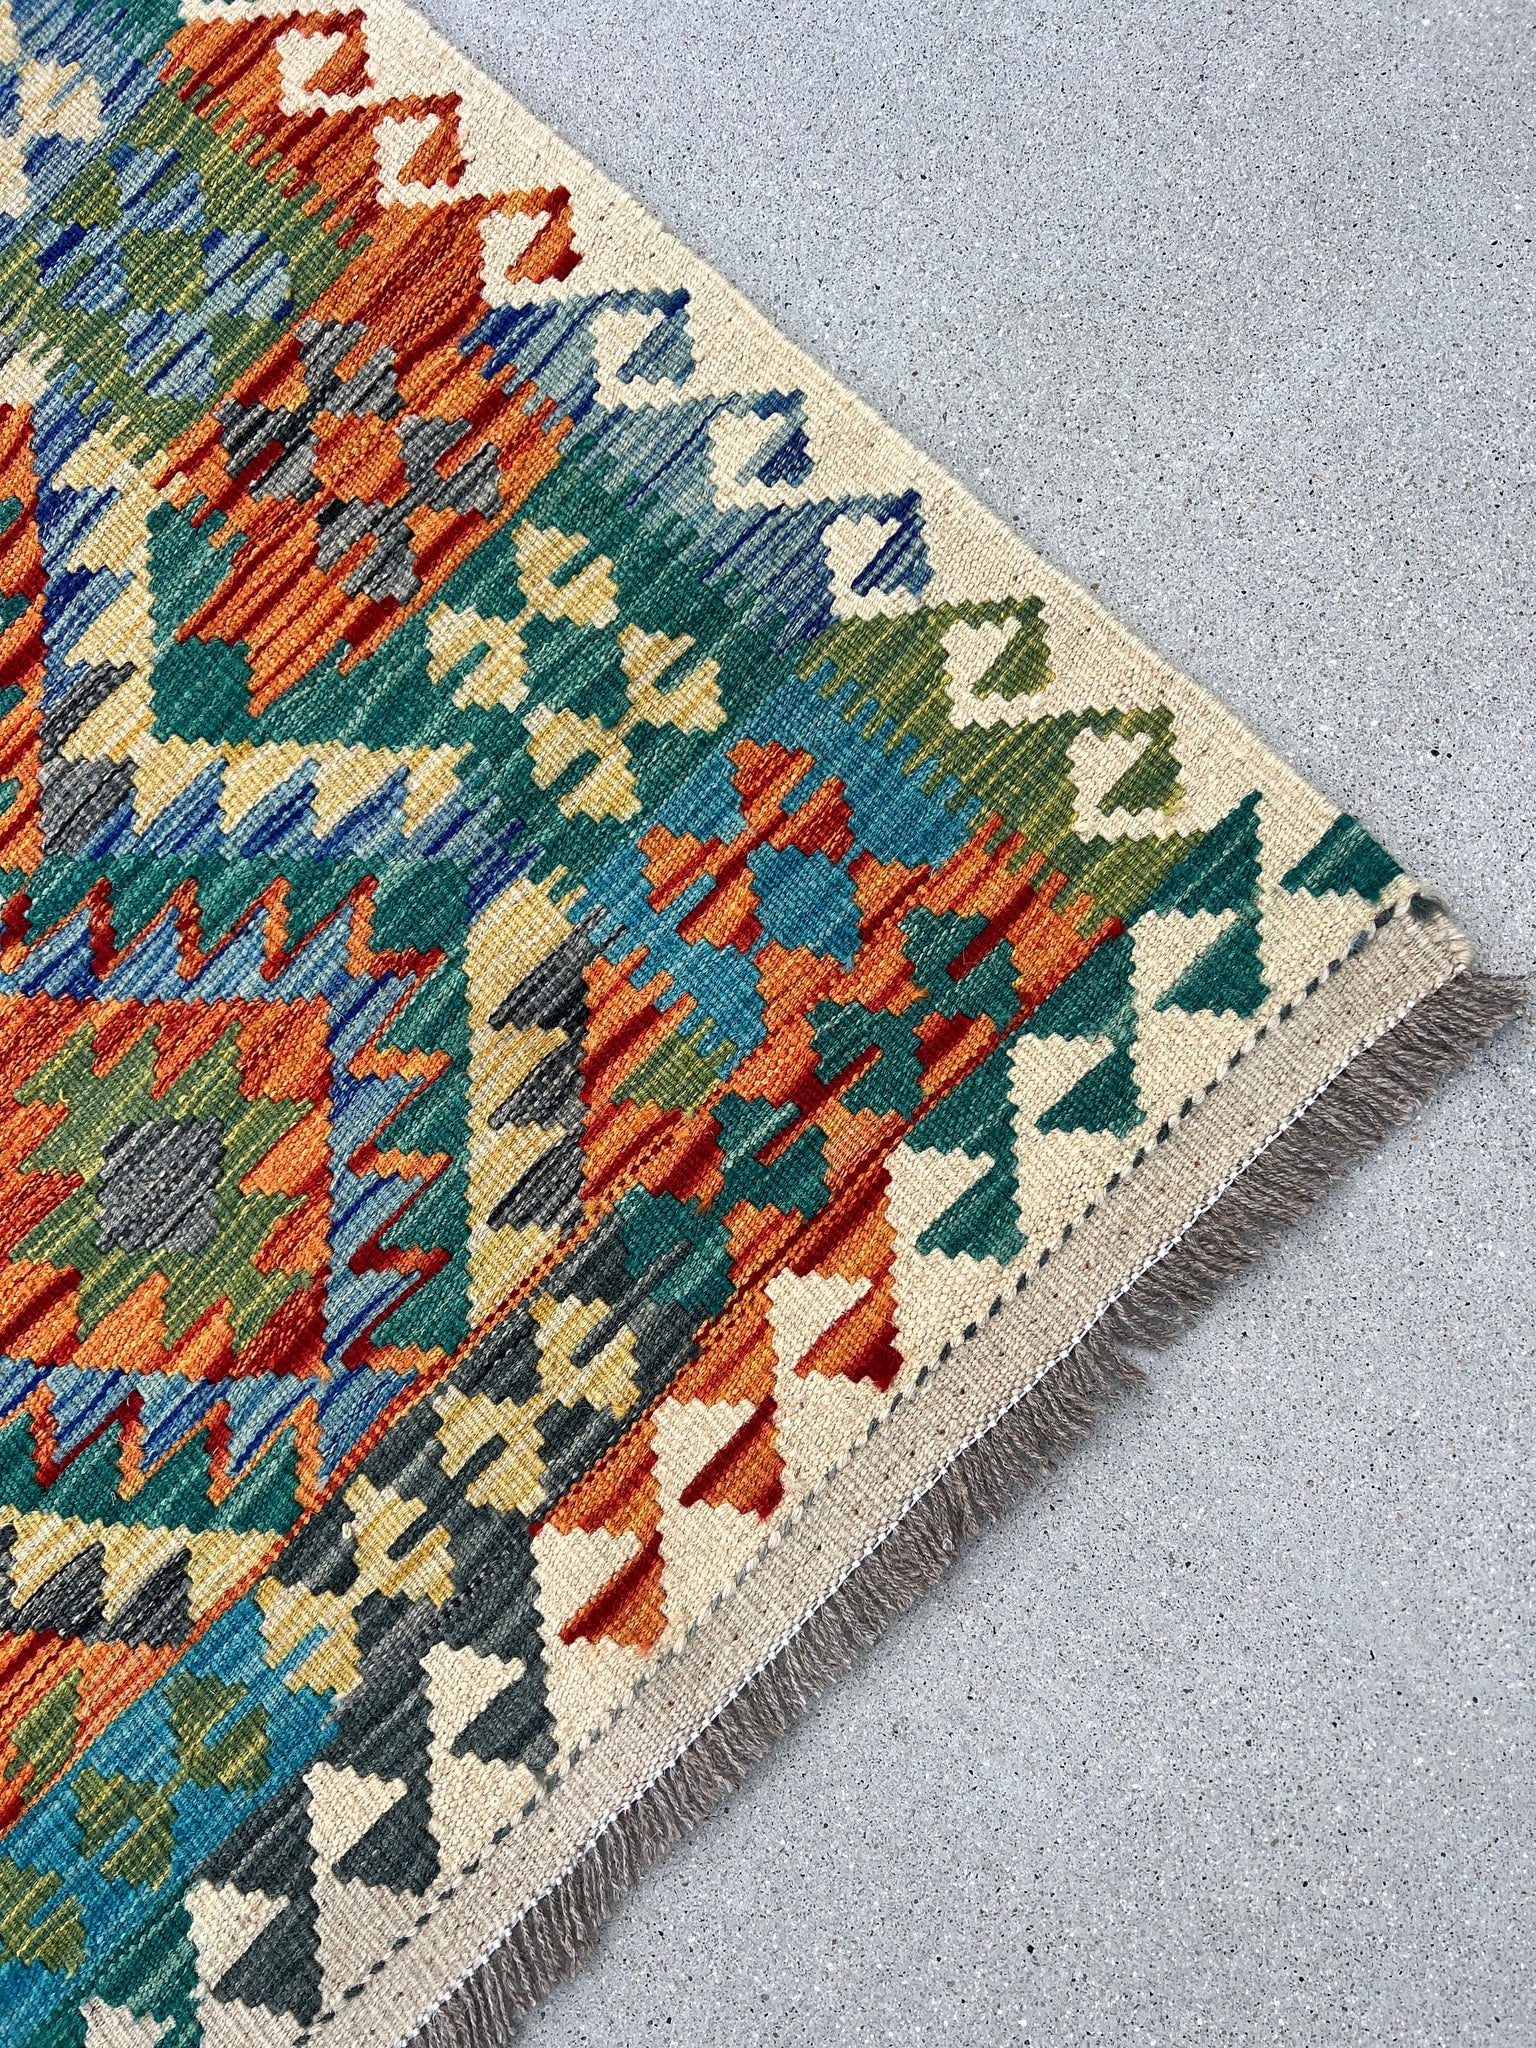 3x7 (60x200) Handmade Afghan Kilim Runner Rug | Cream Beige Burnt Orange Teal Blue Forest Green Yellow | Flatweave Flat Woven Persian Wool